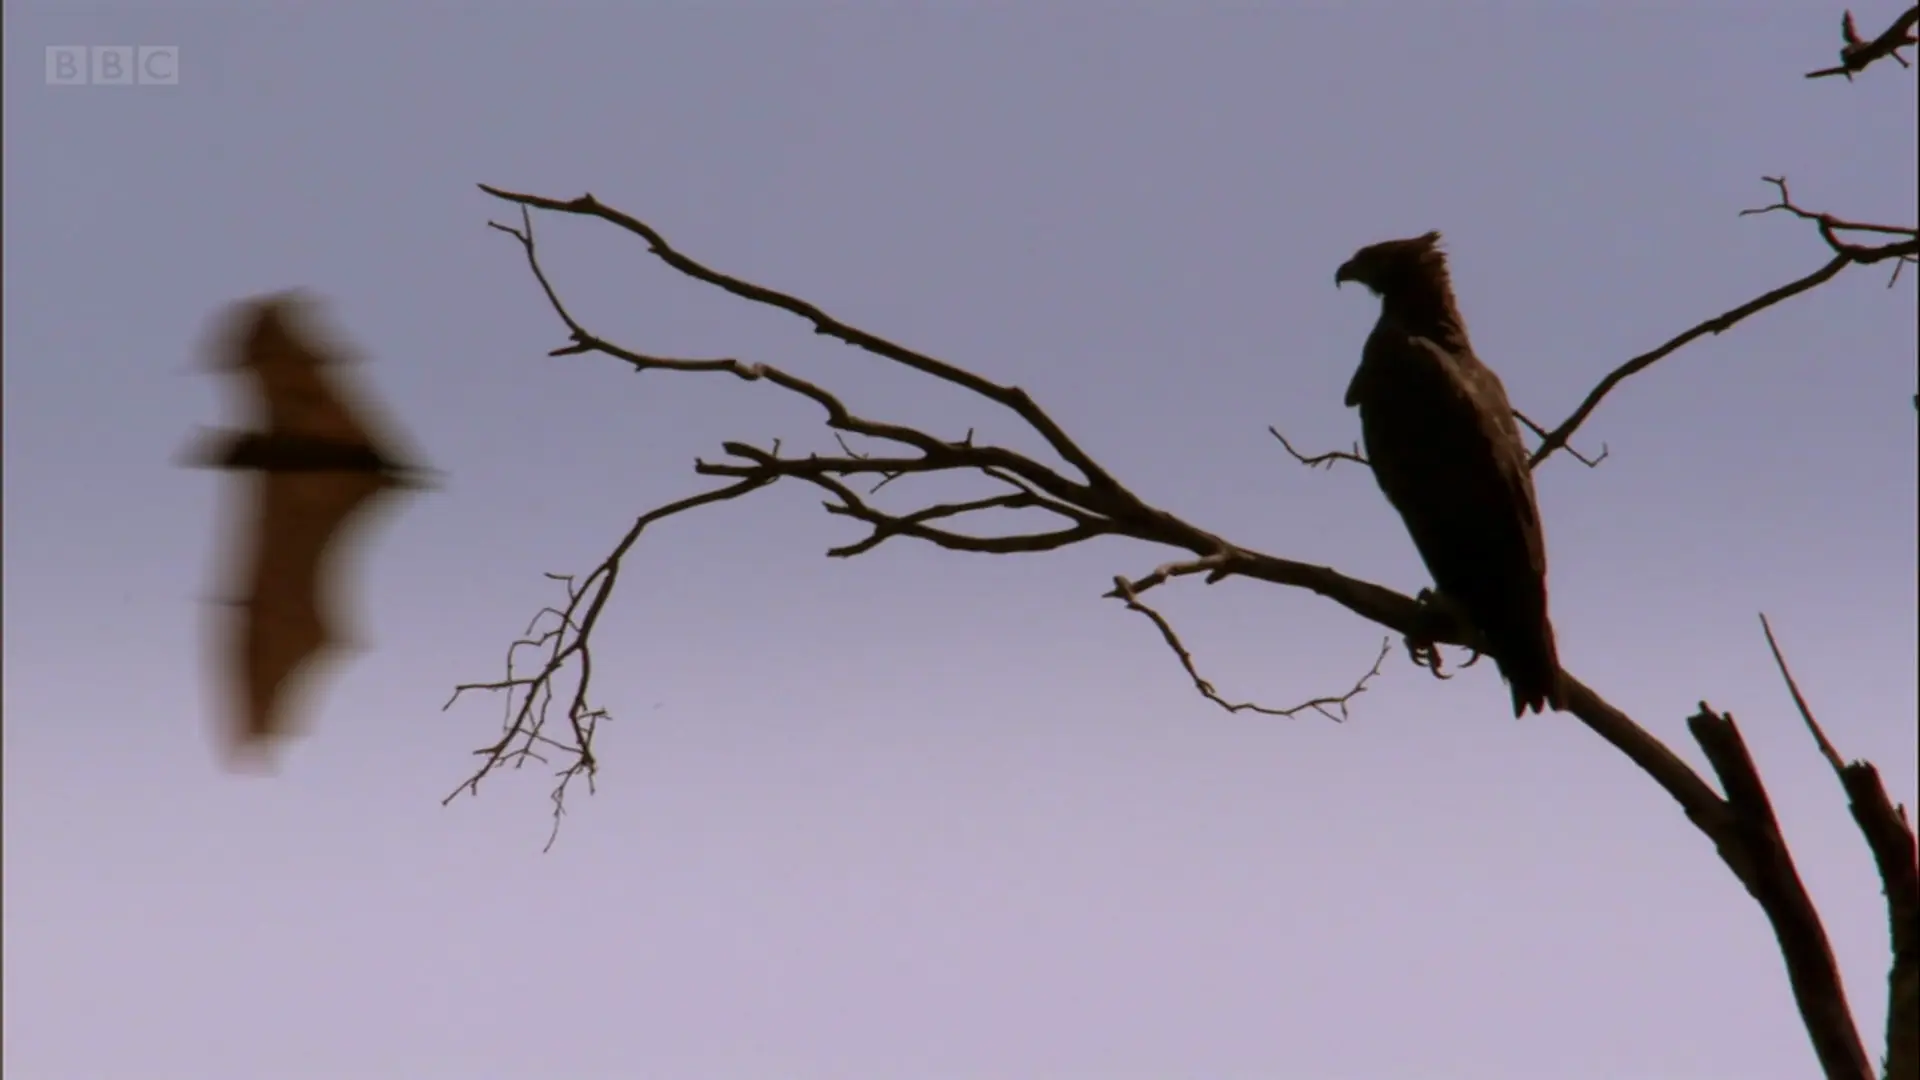 Crowned eagle (Stephanoaetus coronatus) as shown in Africa - Savannah